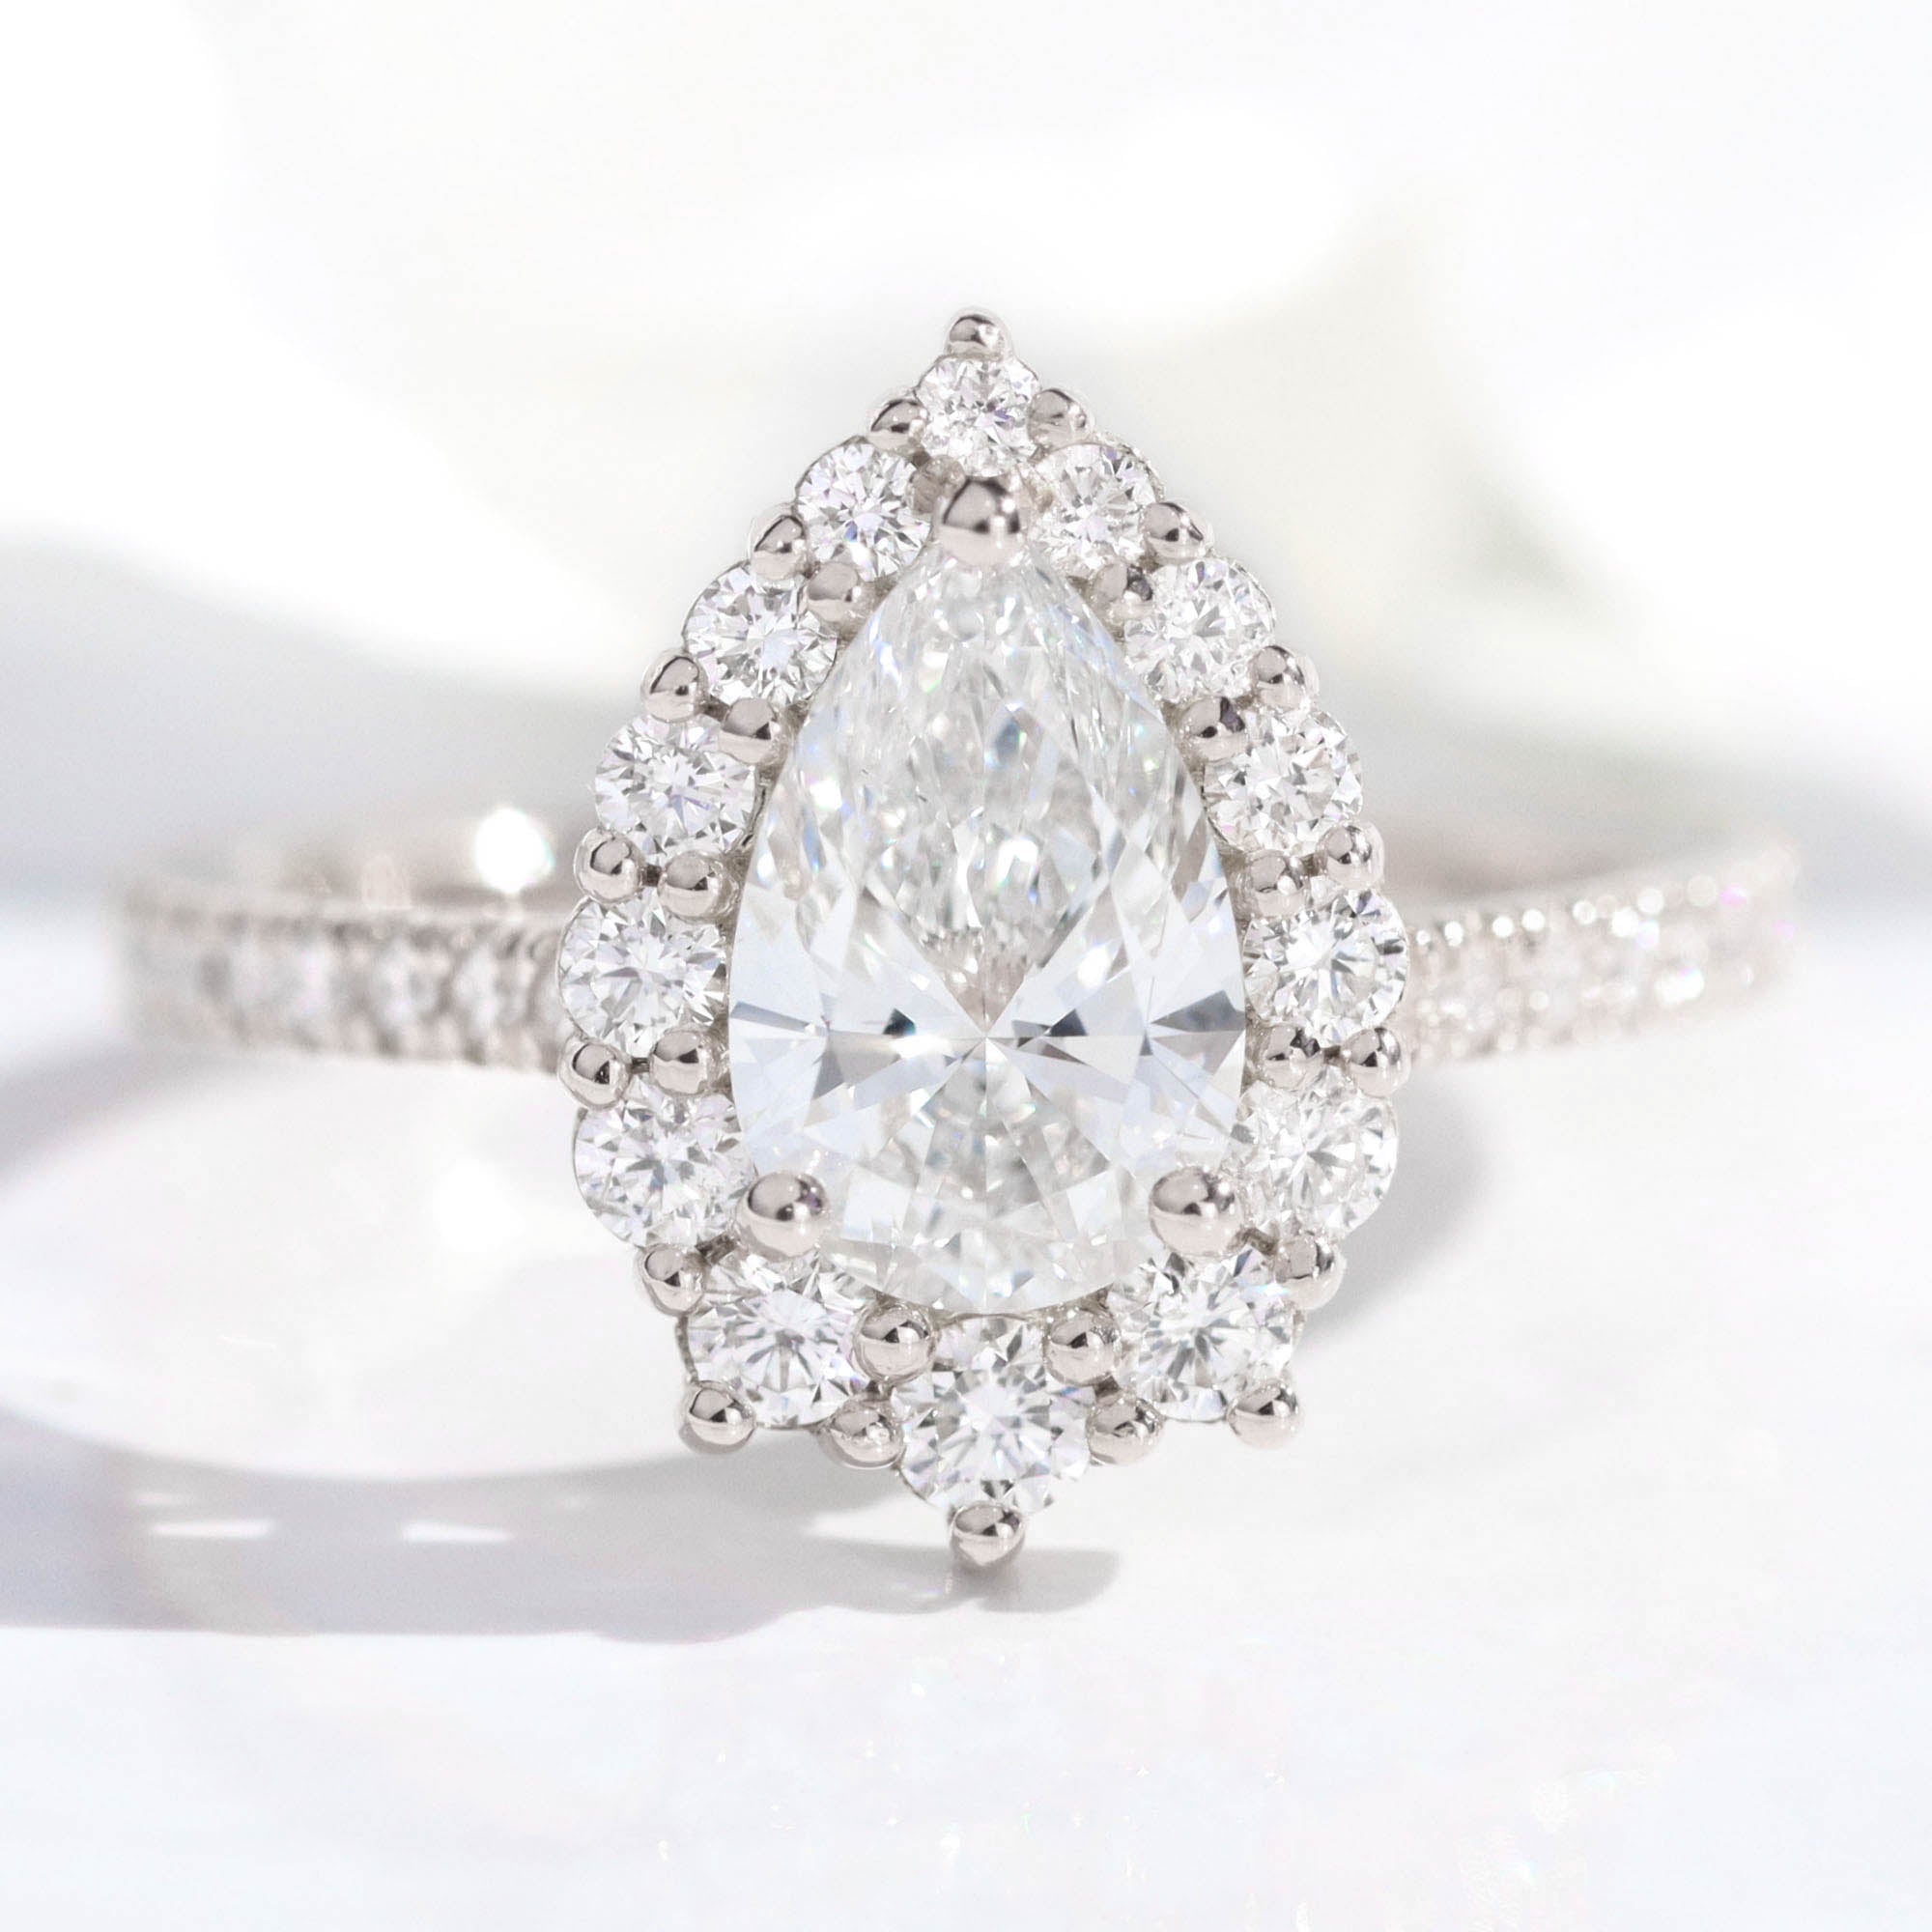 lab diamond ring white gold pear diamond halo engagement ring La More Design Jewelry